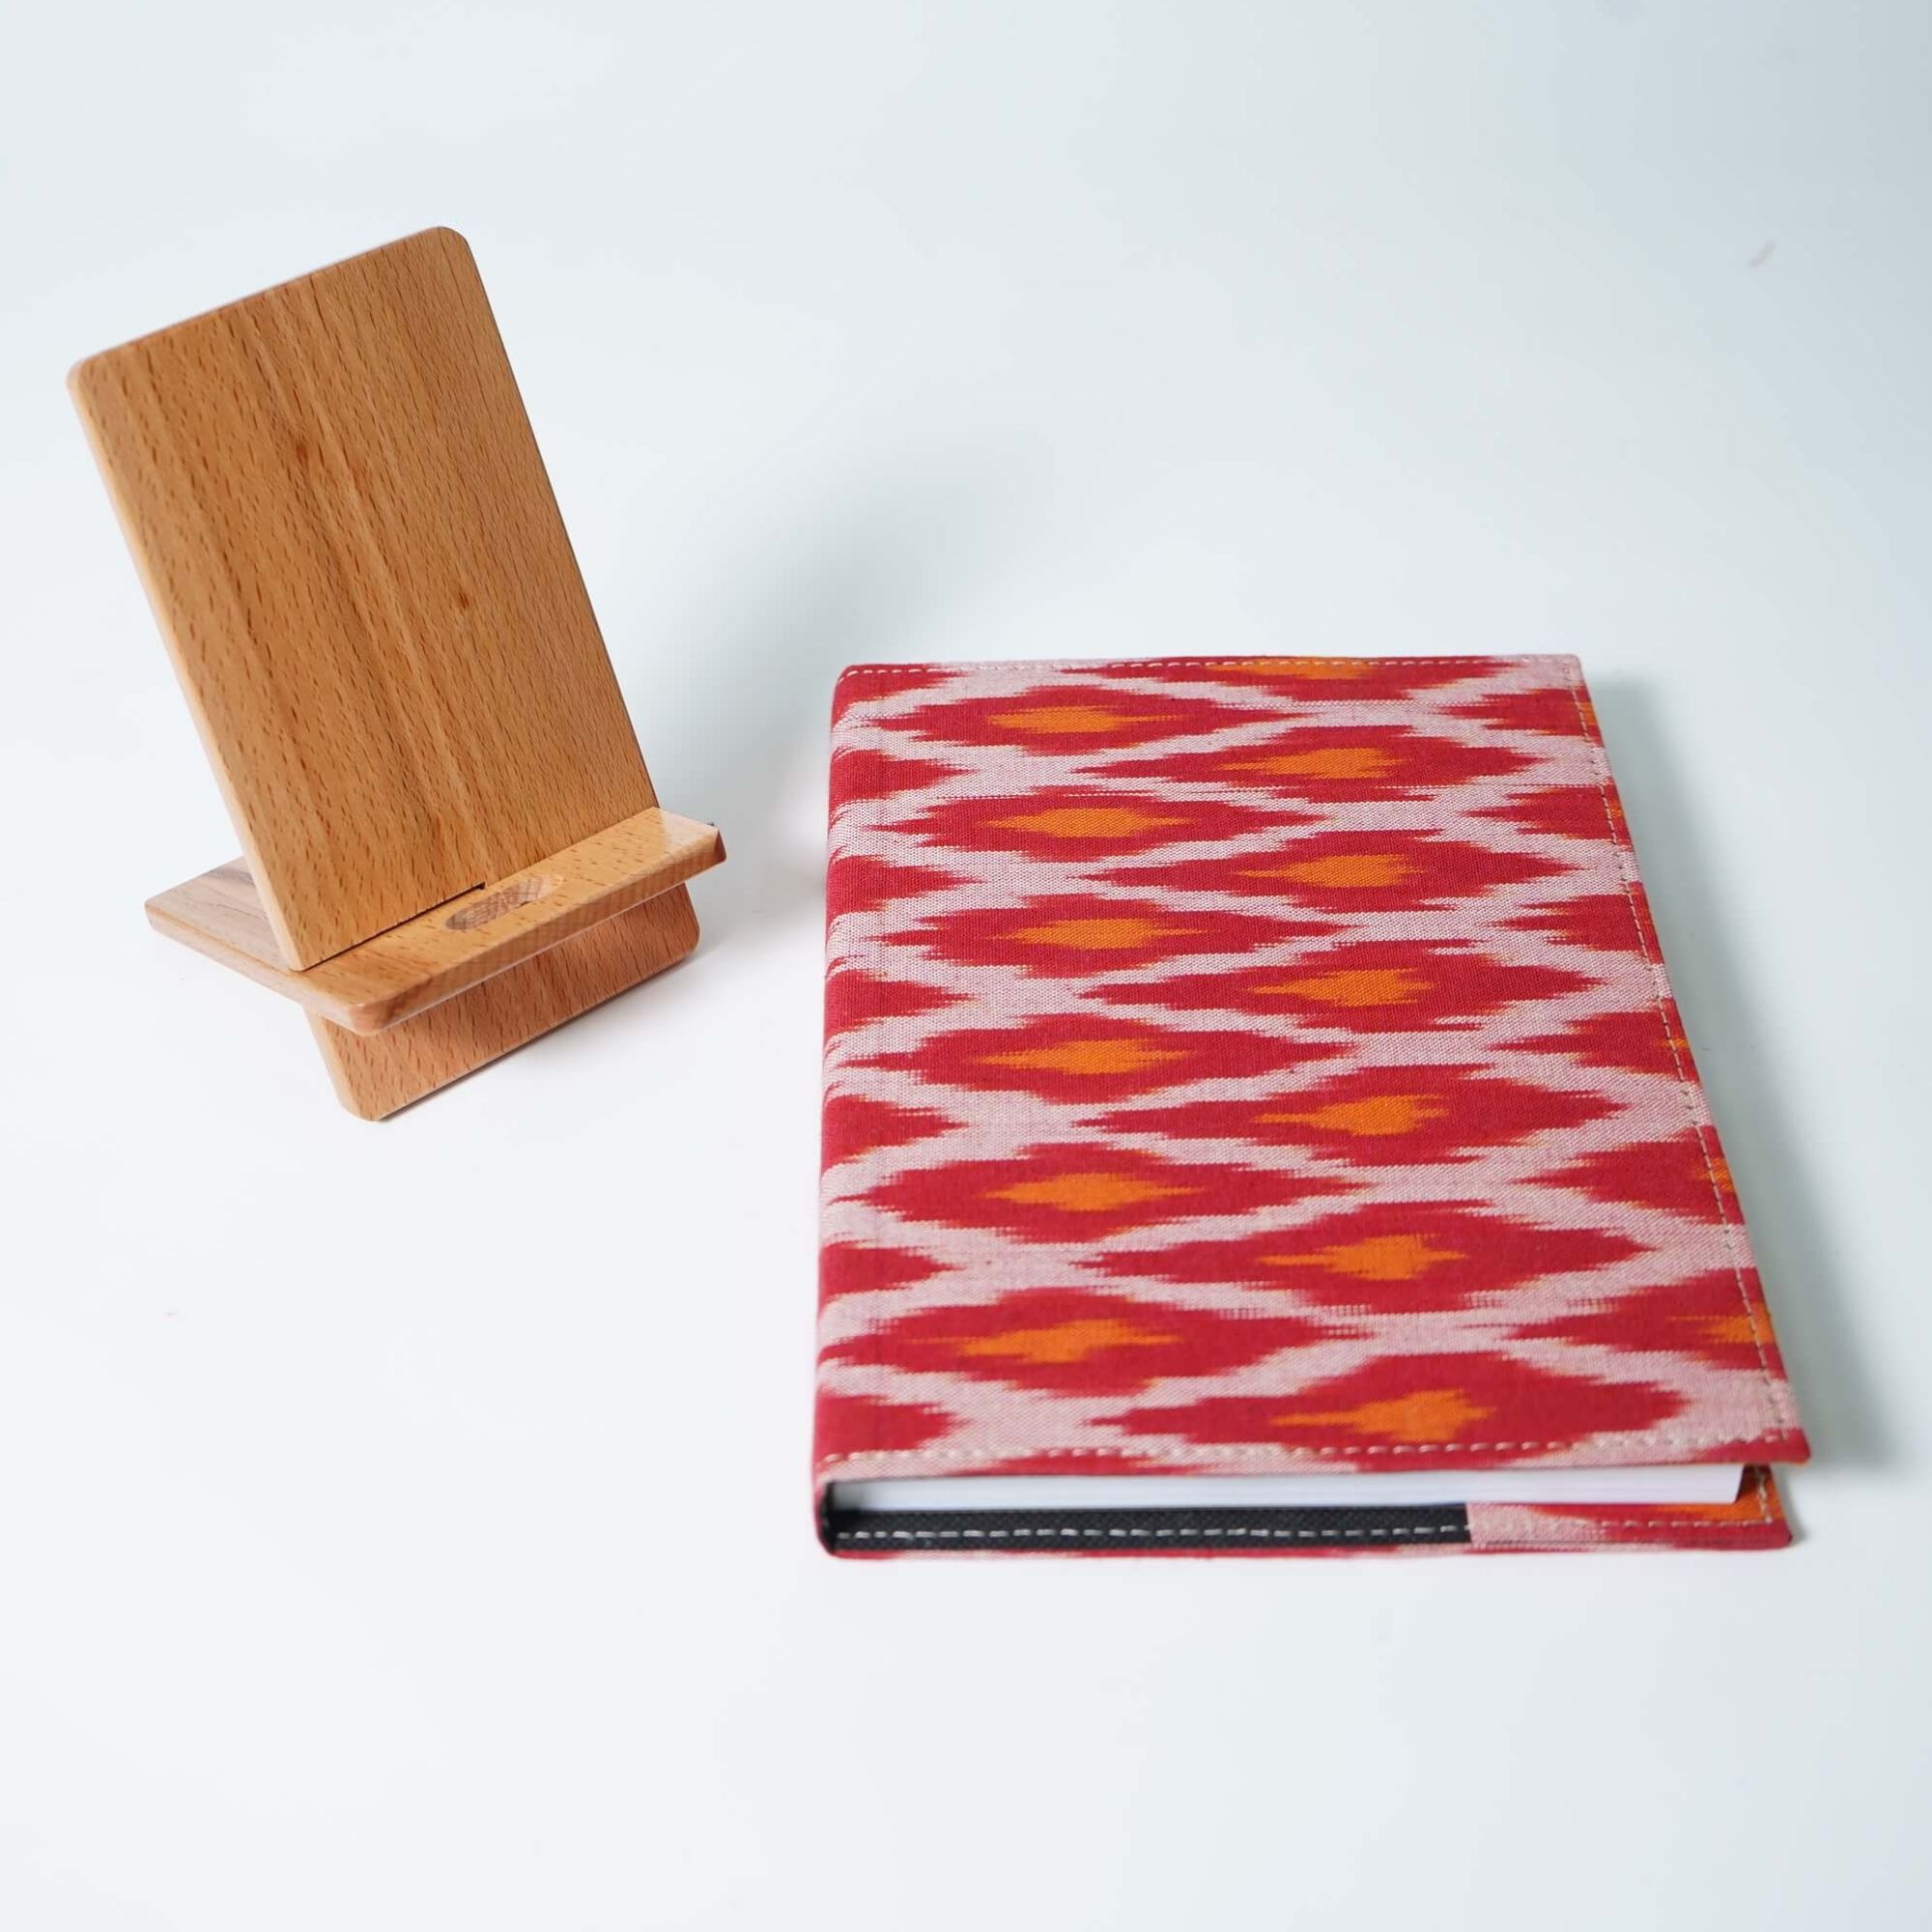 Designer Notebook with Mobile Phone Stand | Haath Ka Bana